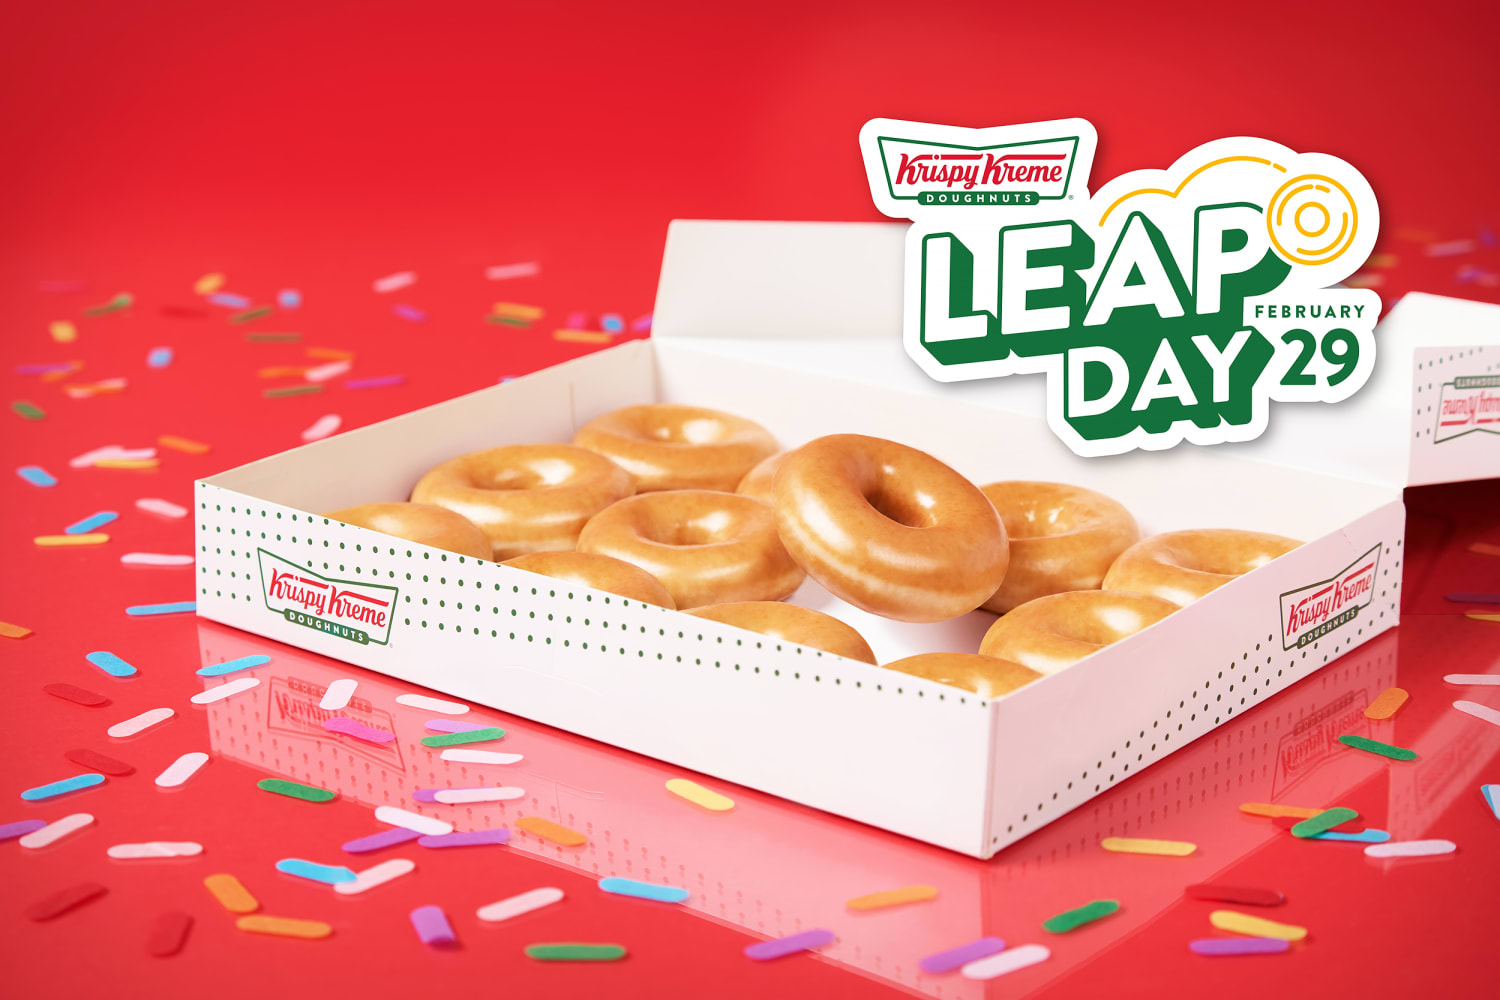 Krispy Kreme’s sweet leap day deal: A dozen doughnuts for $2.29